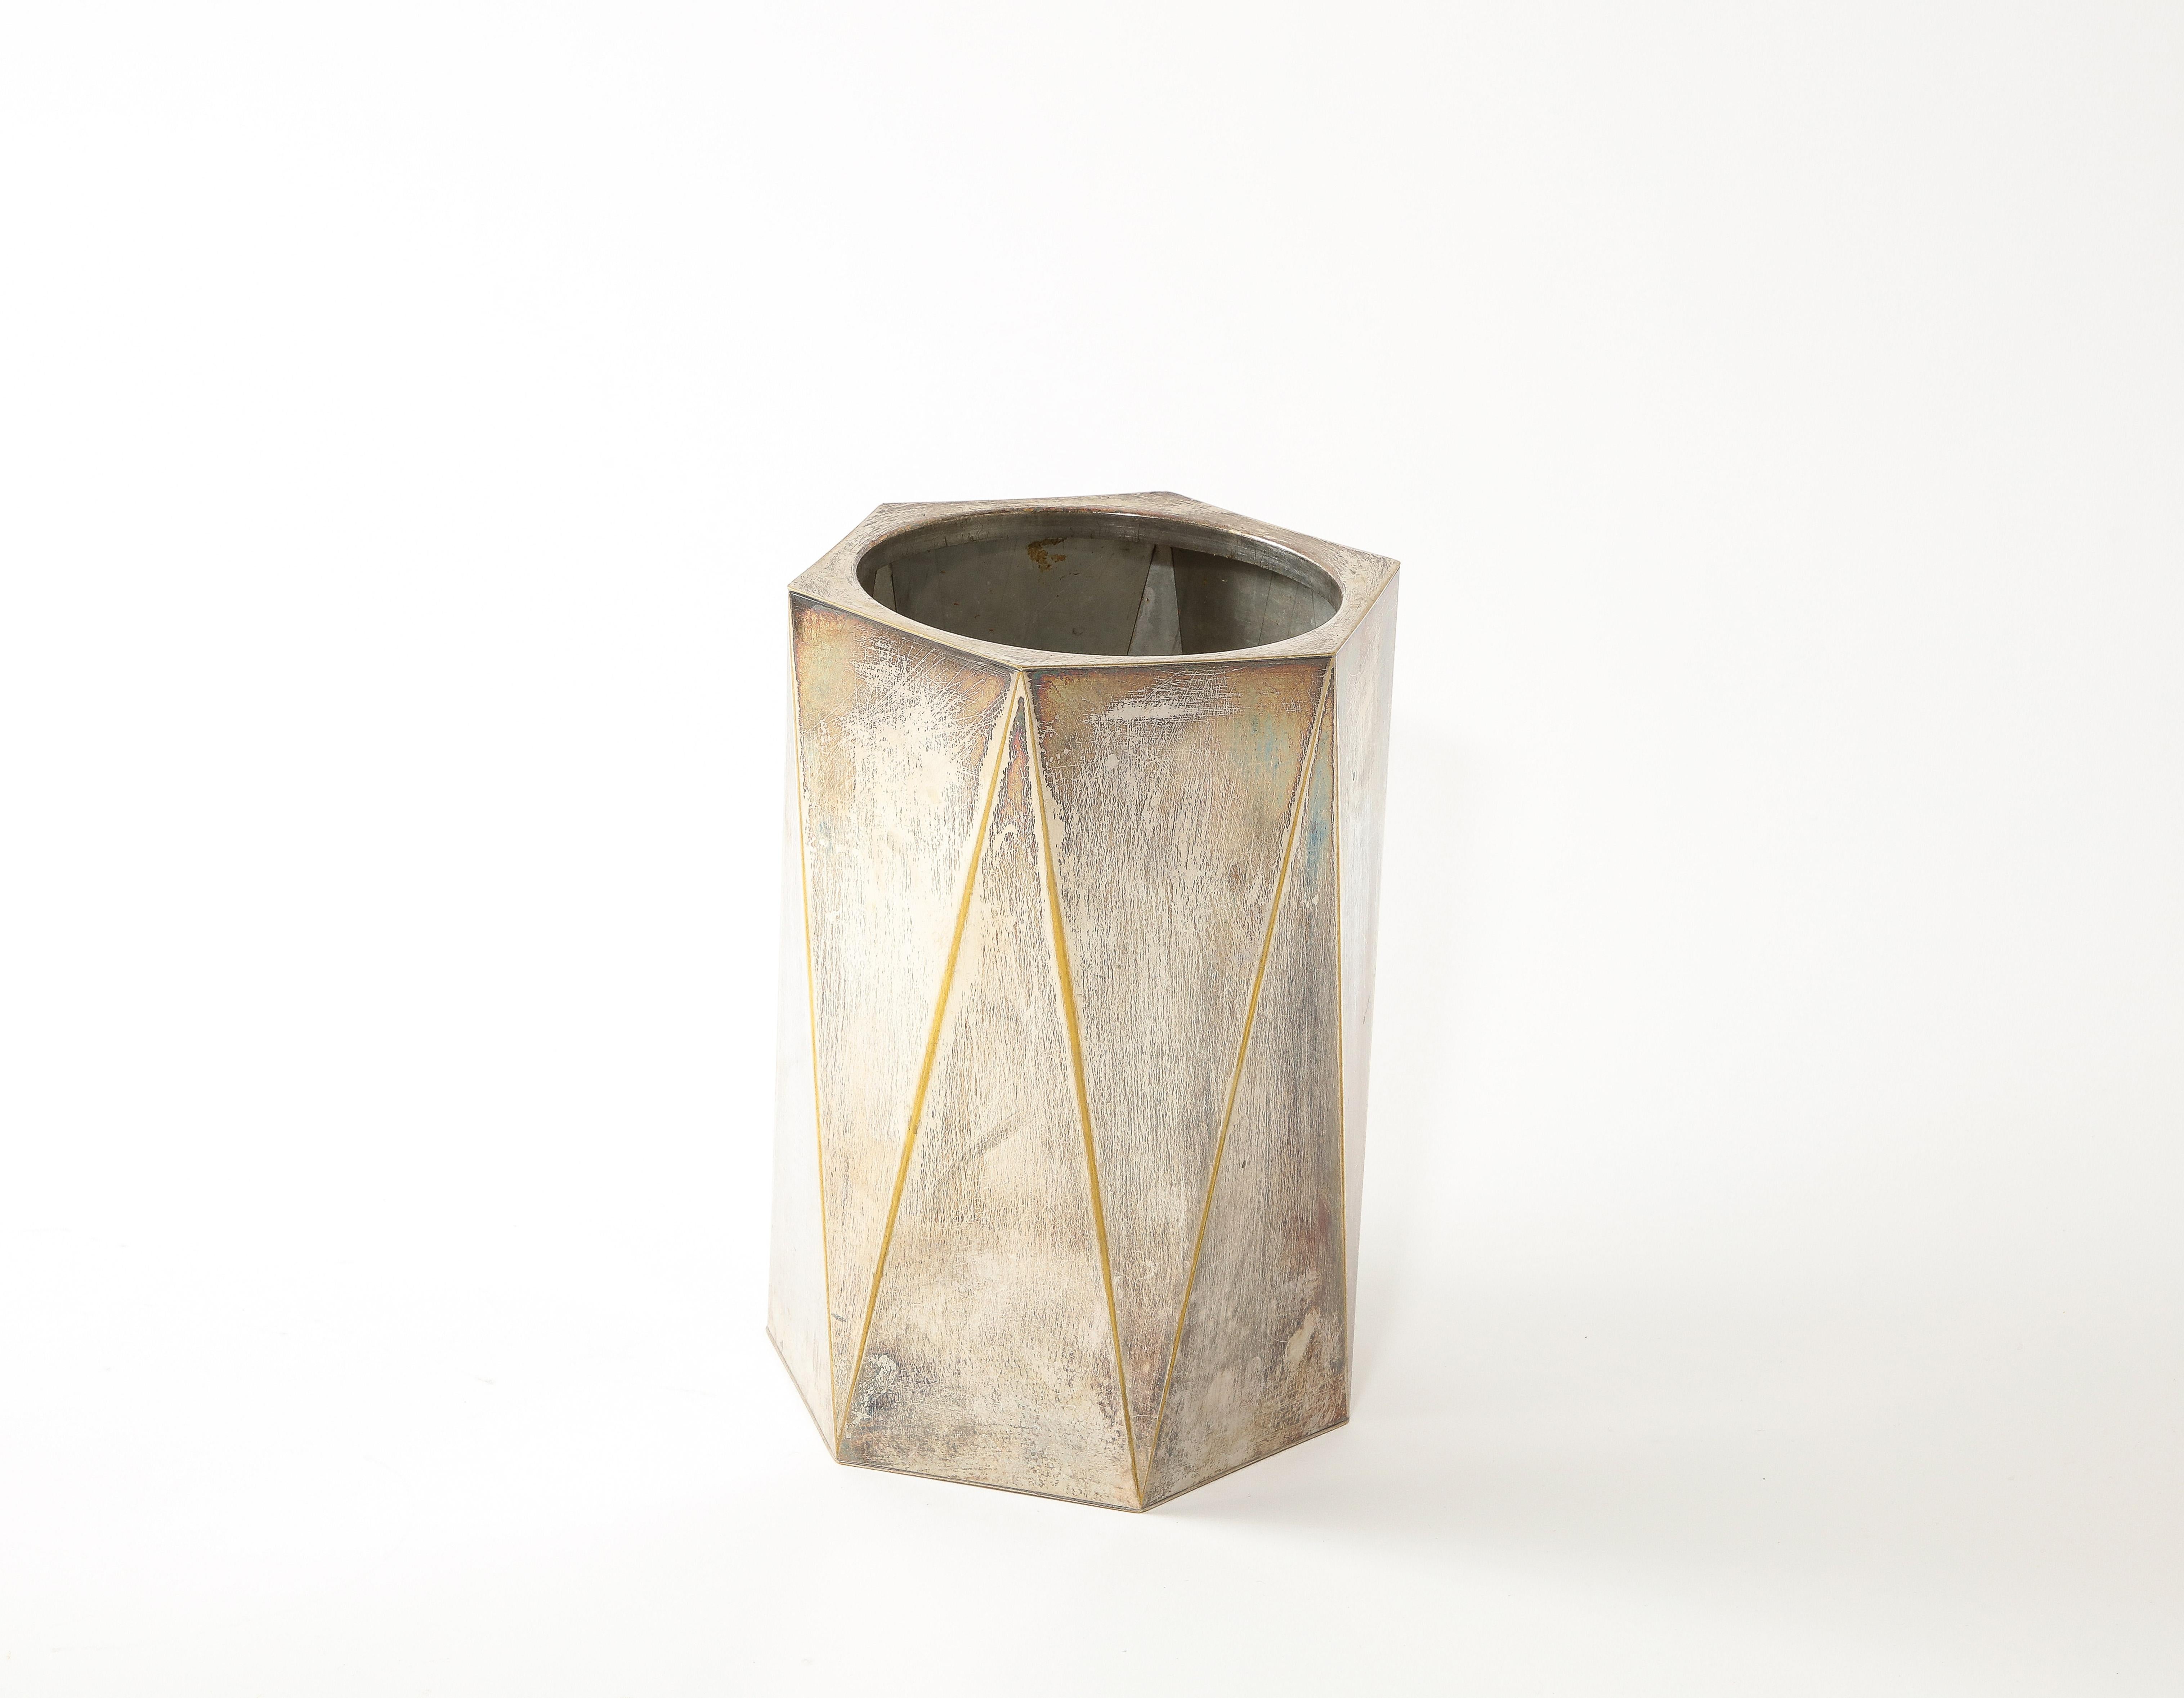 Cubist-inspired Lancel vase in silver-plated brass, hallmarks on the bottom.